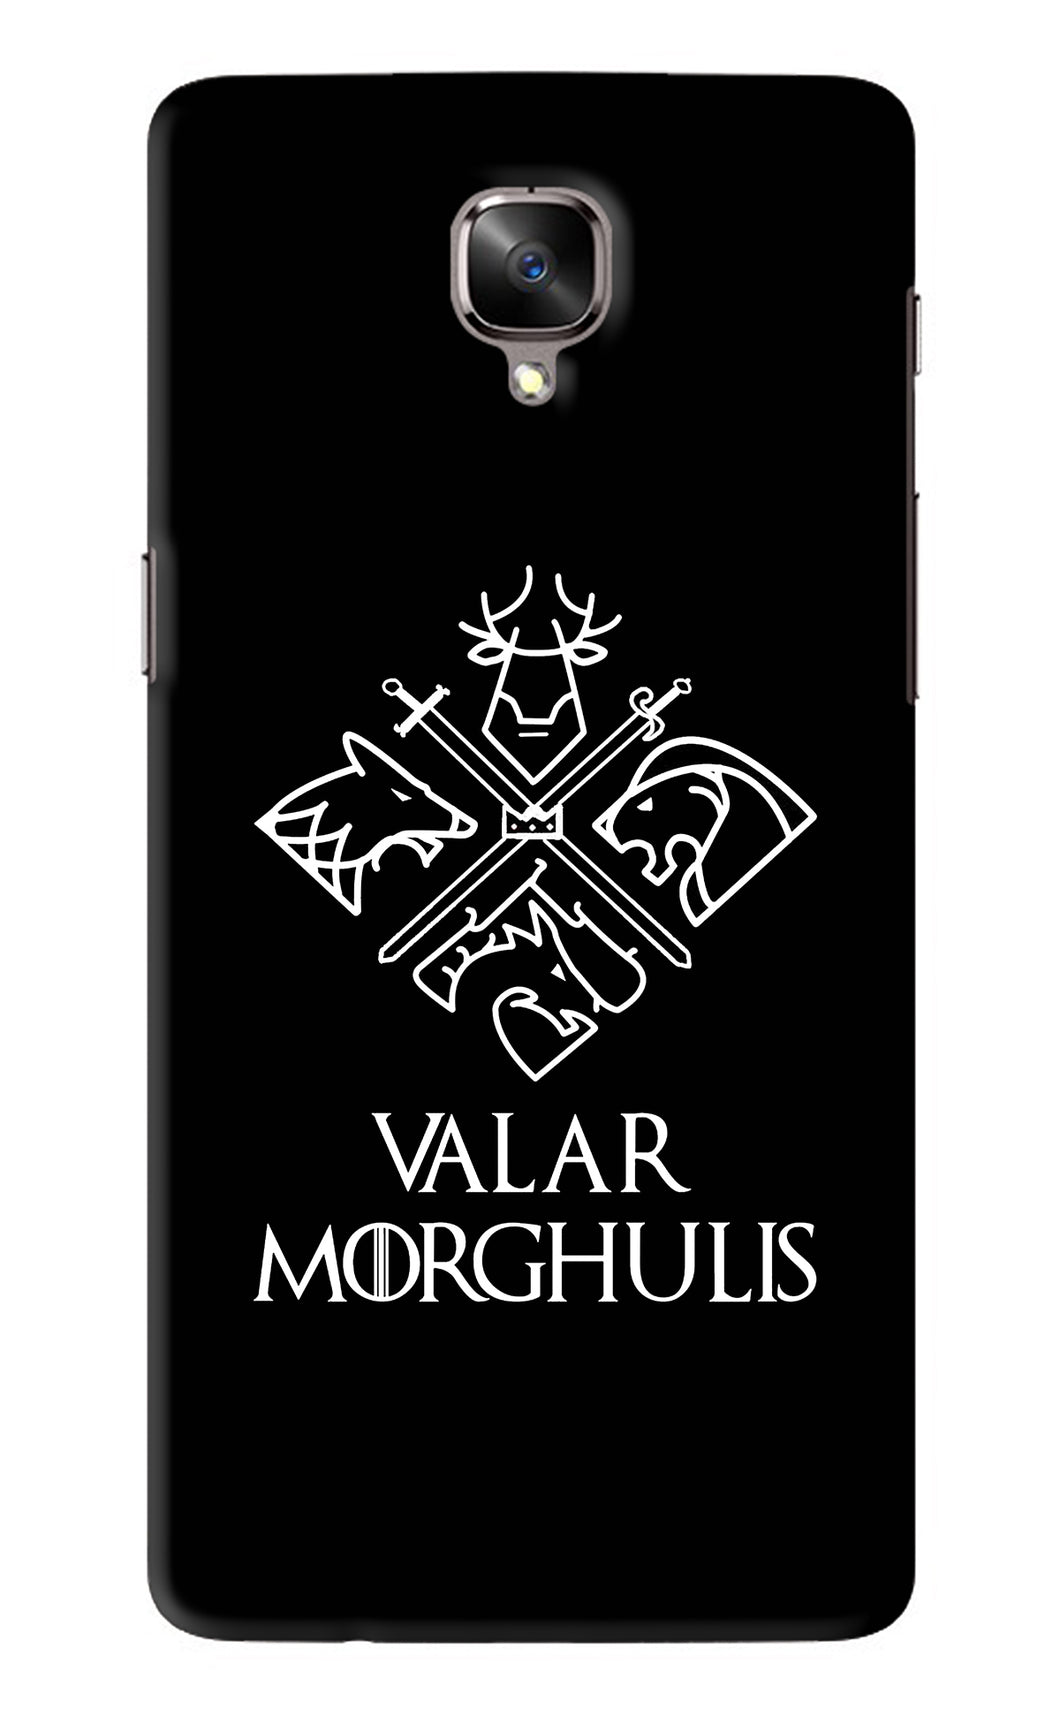 Valar Morghulis | Game Of Thrones OnePlus 3T Back Skin Wrap